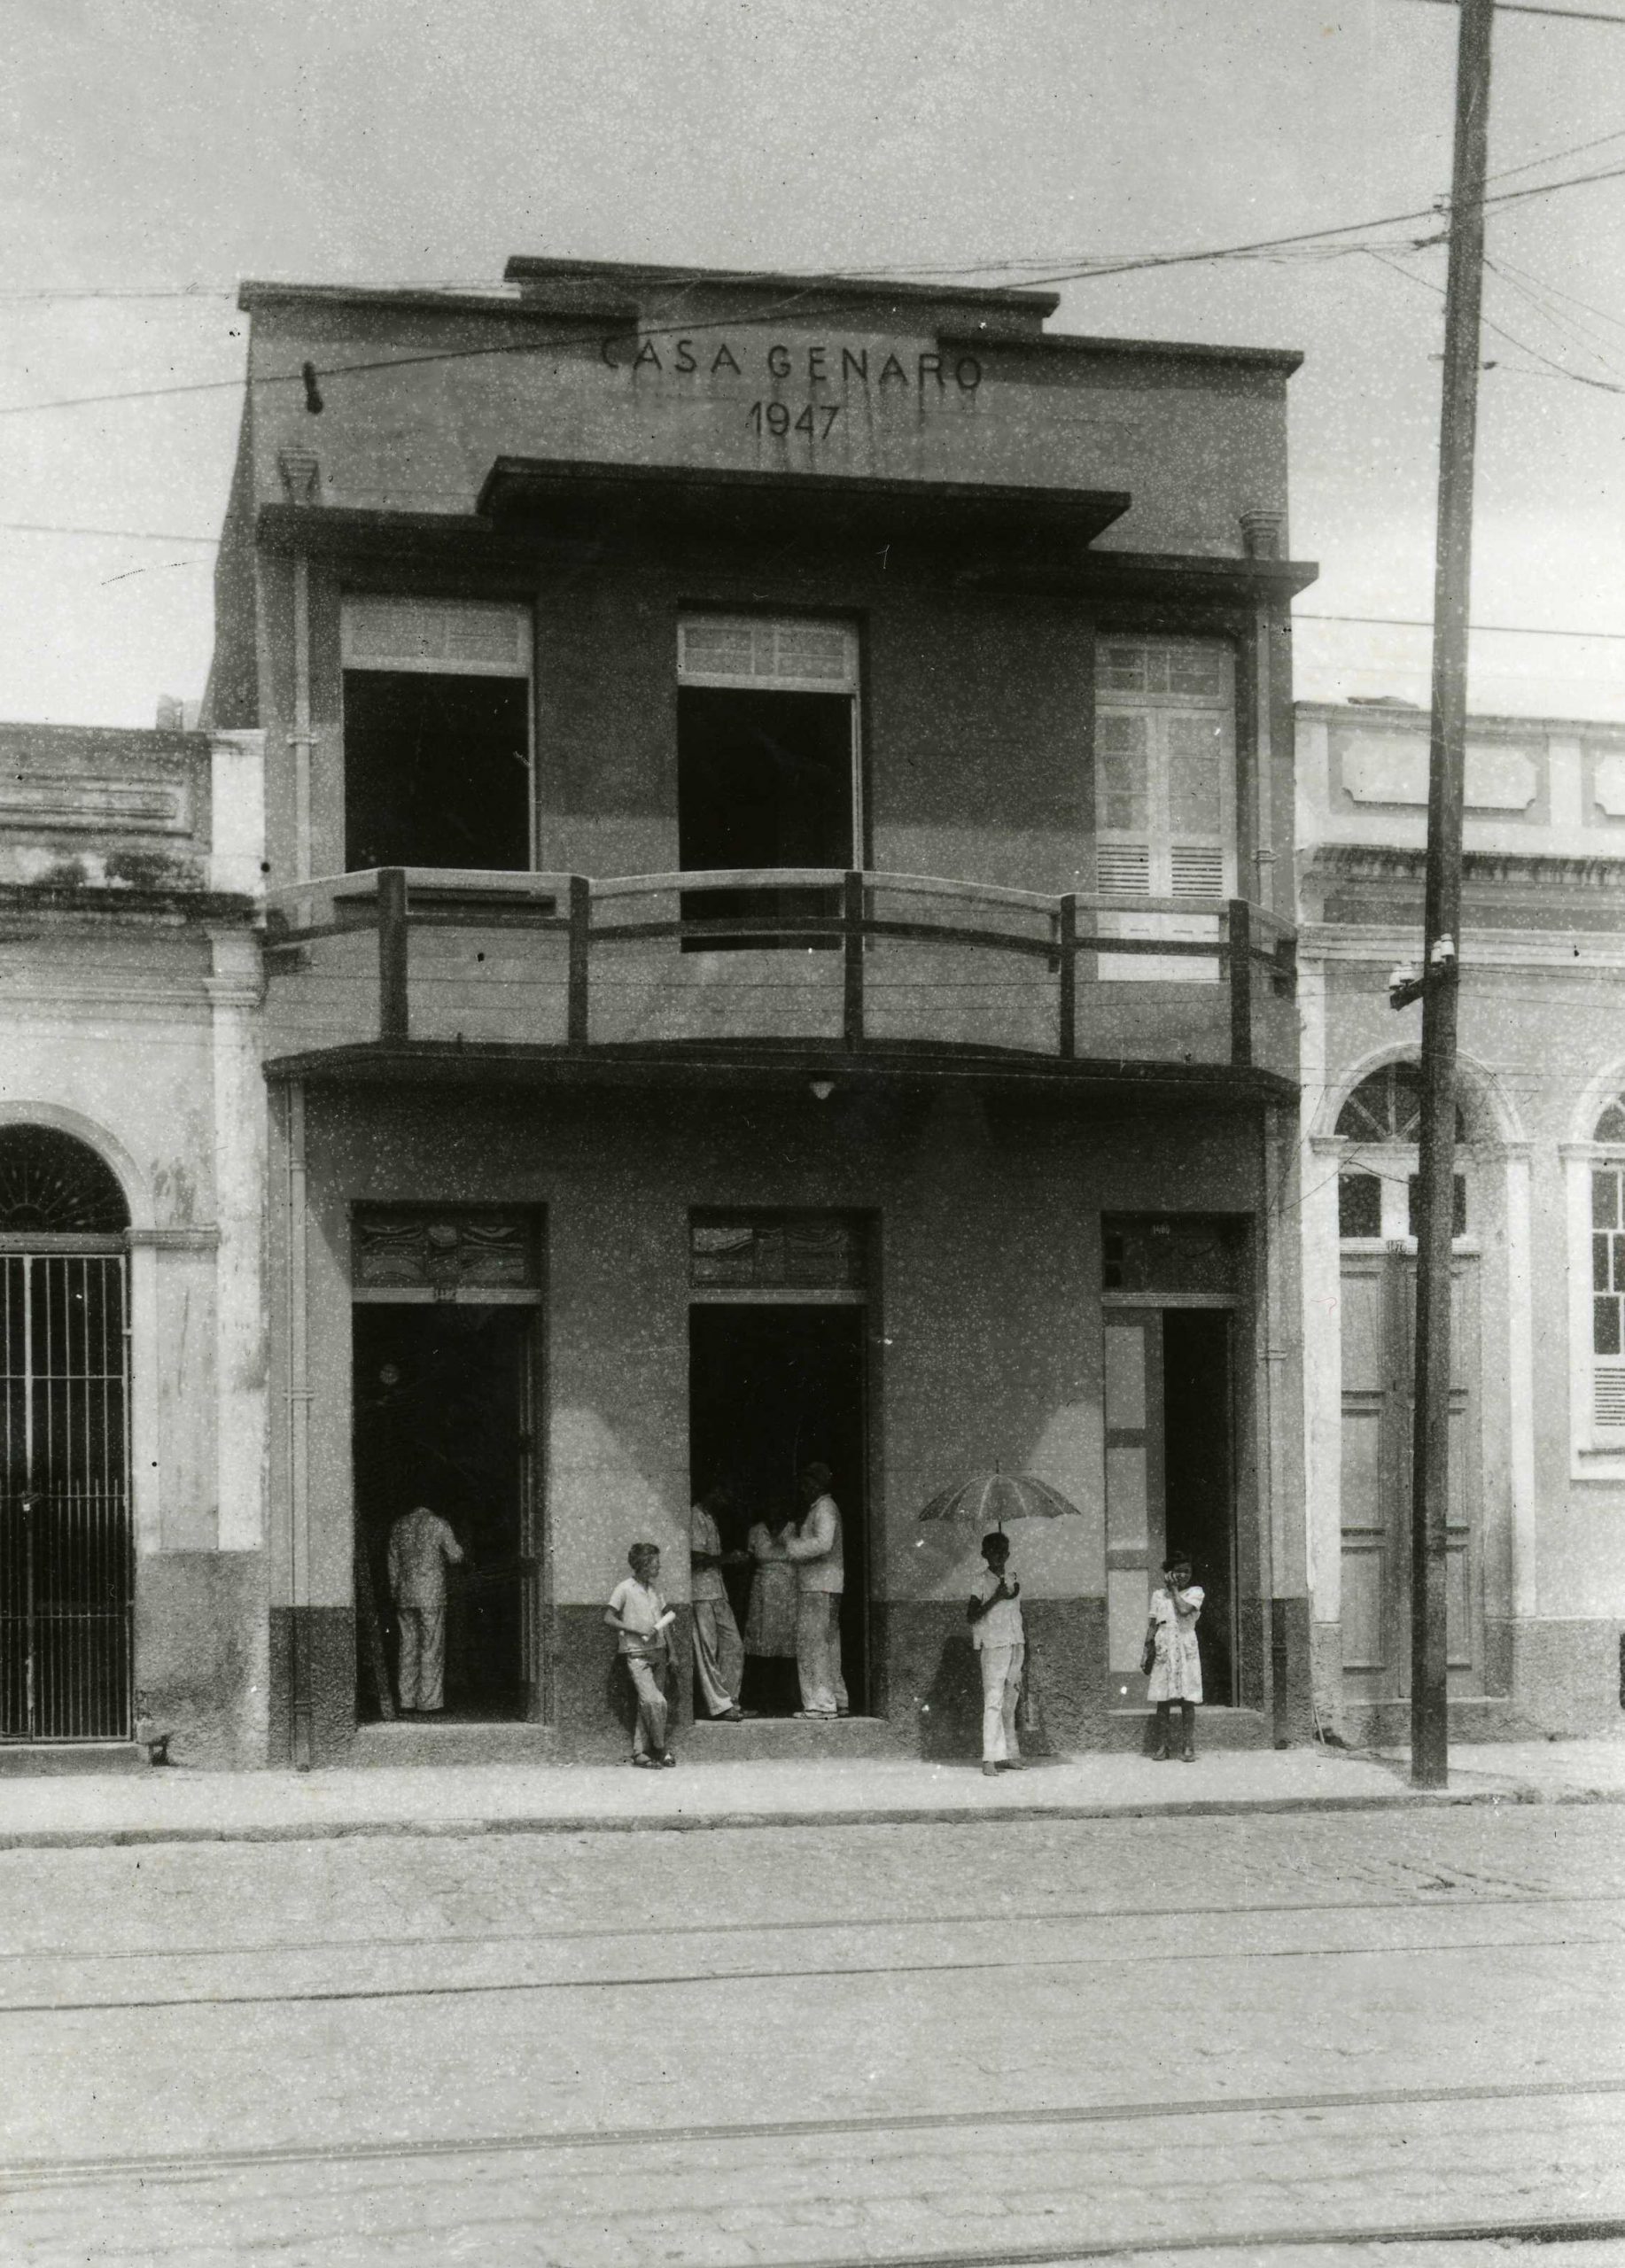 Prédio da Casa Genaro 1947 - Instituto Durango Duarte